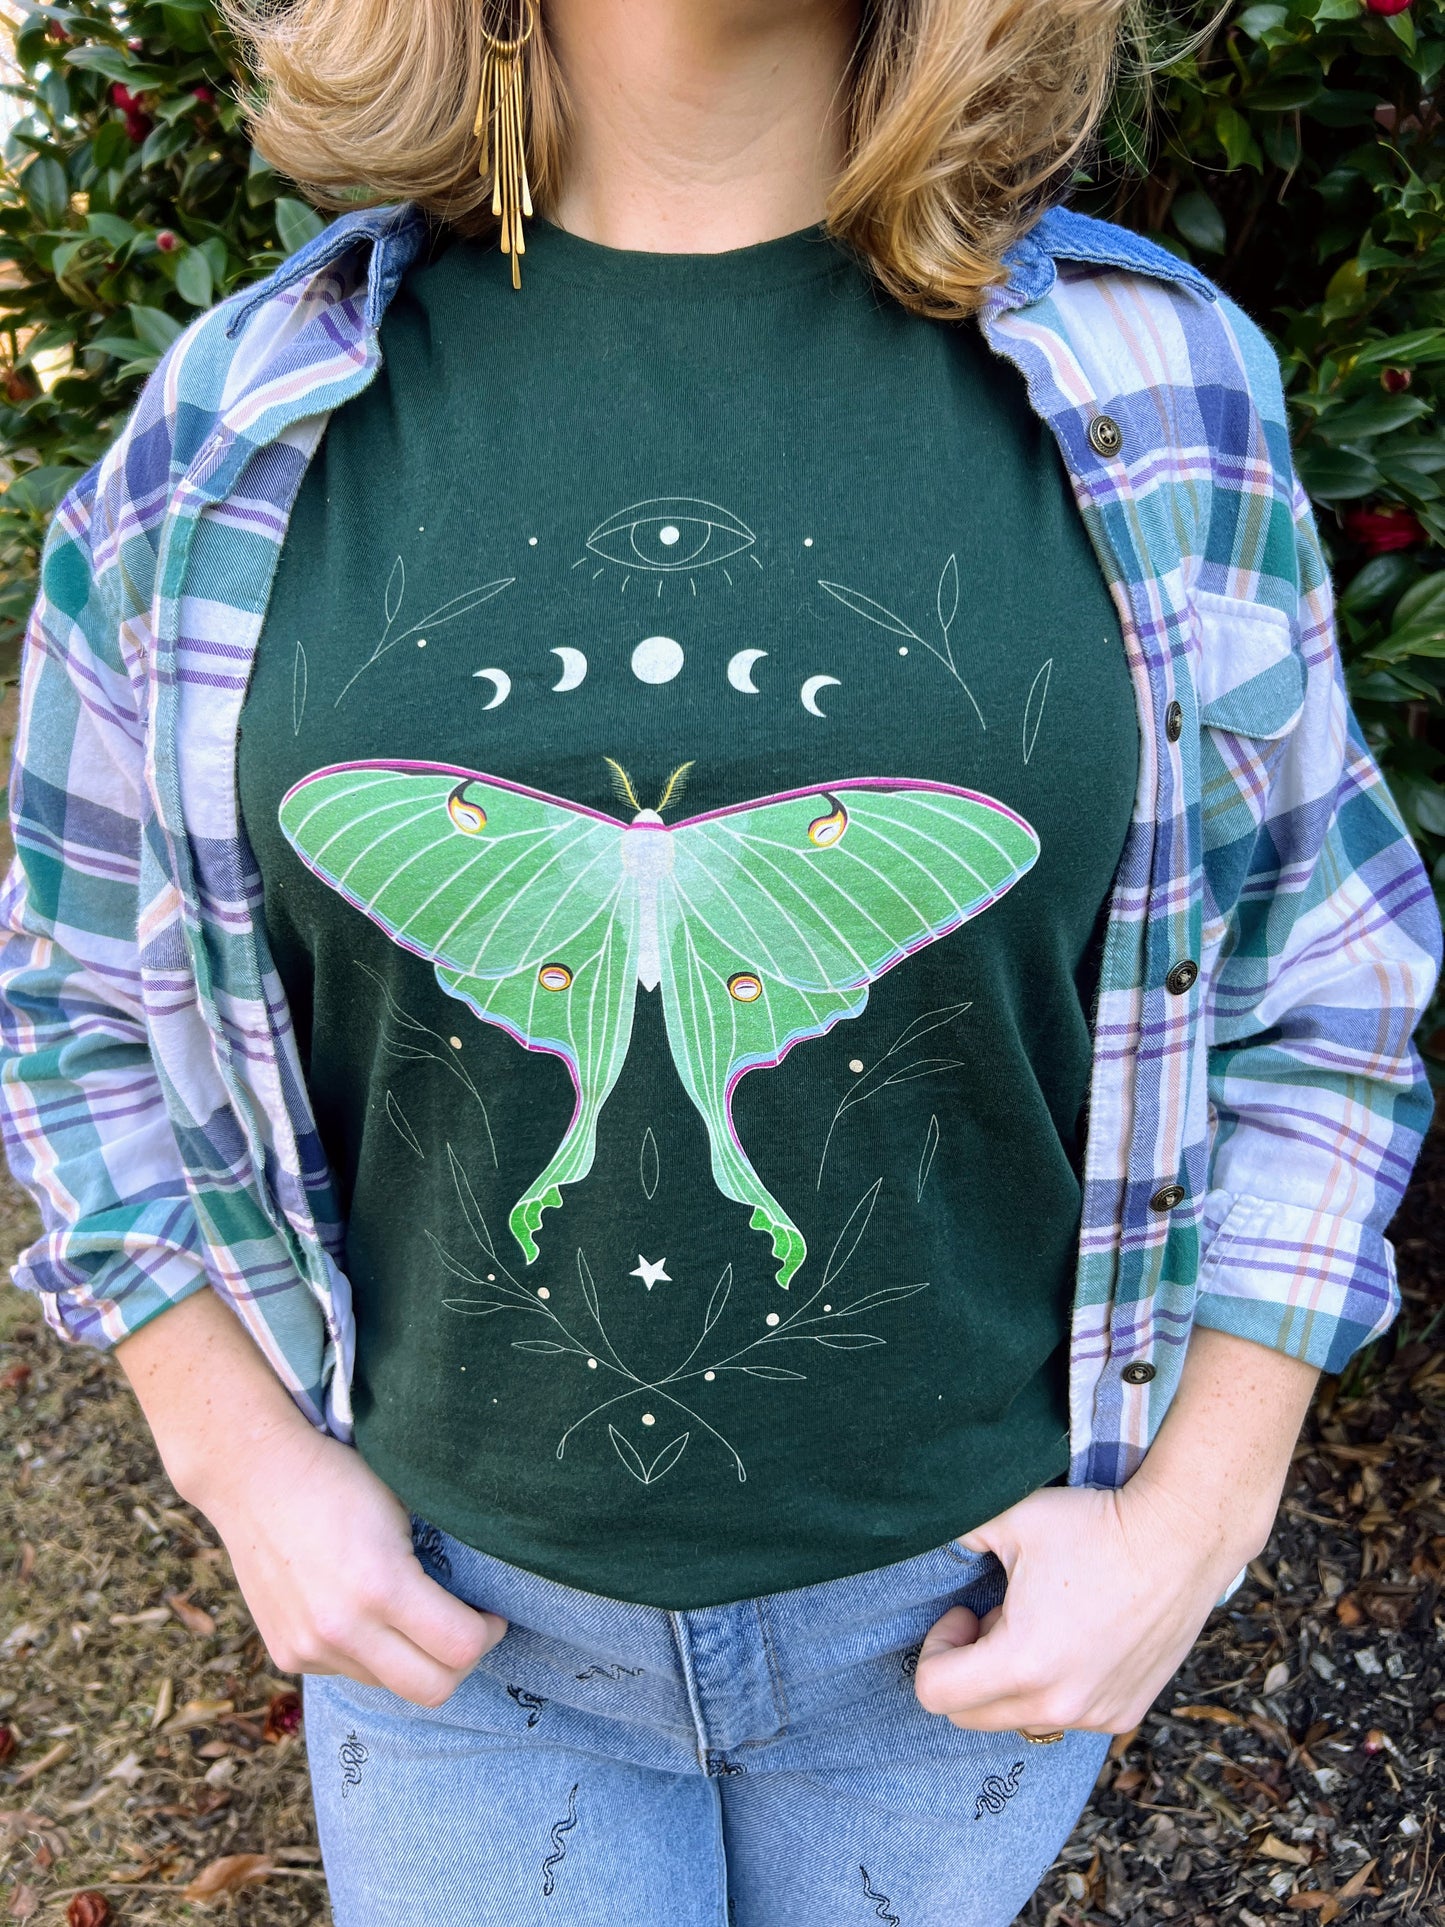 Luna Moth Shirt, Unisex Jersey Mystical Witchy Tee